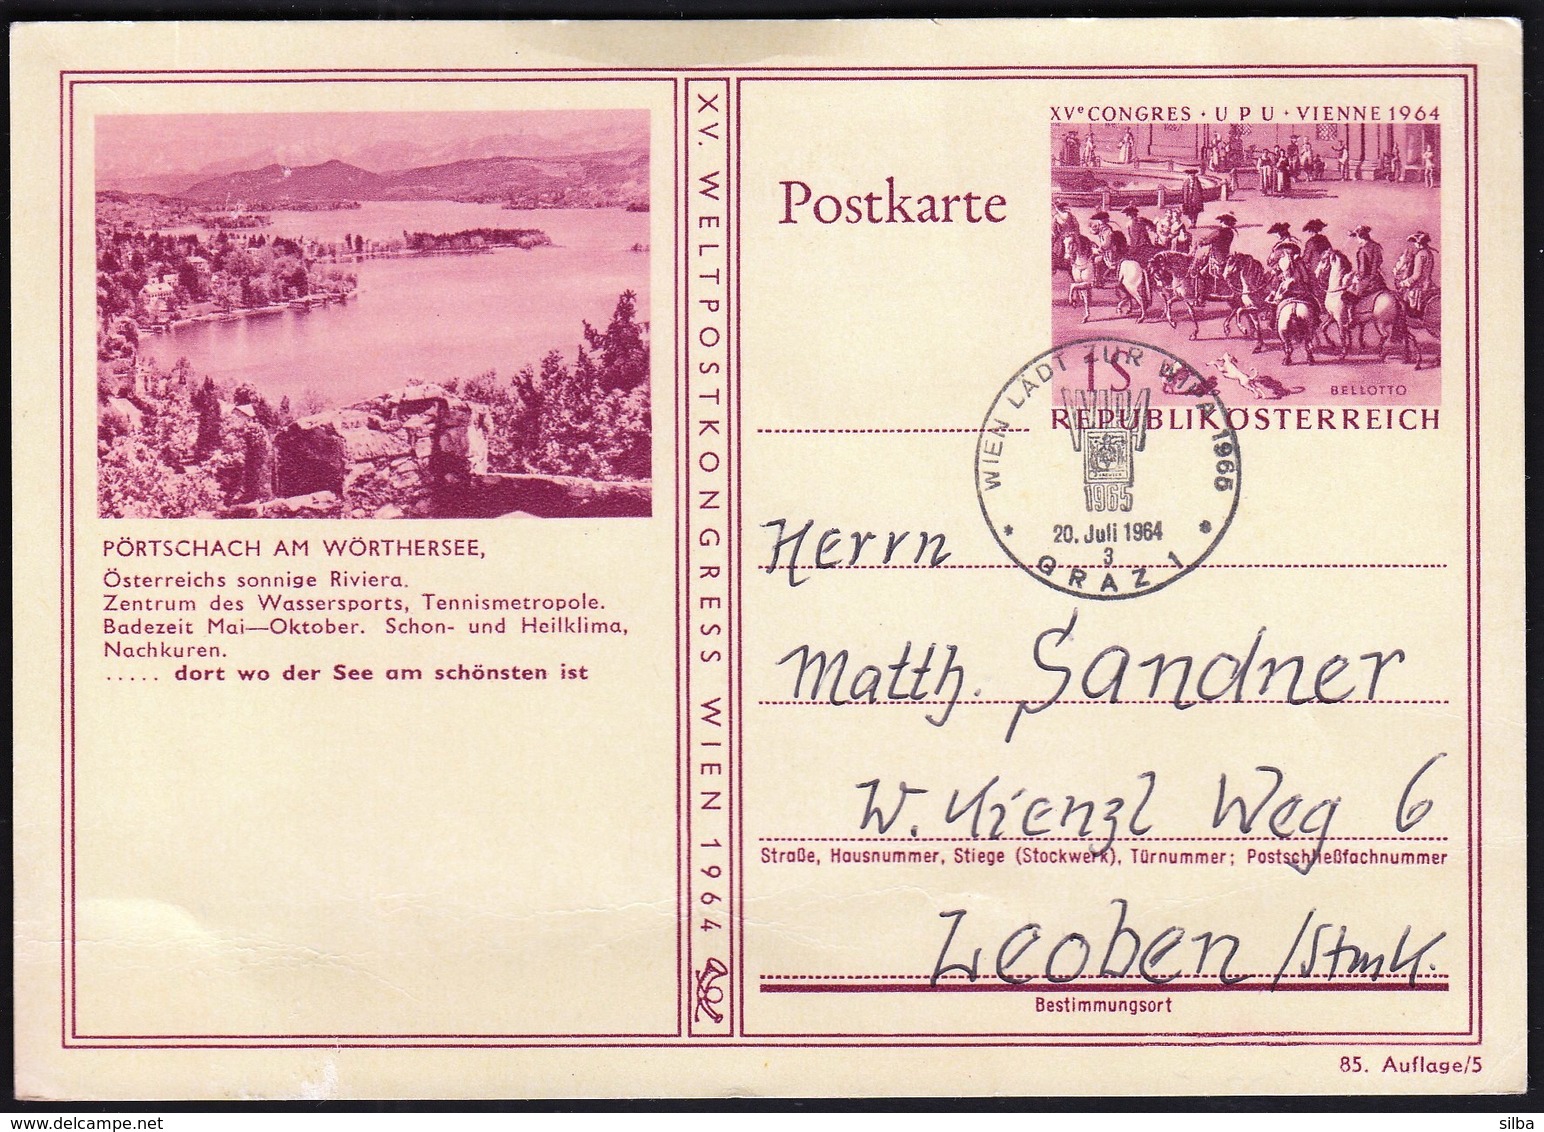 Austria Graz 1964 / Philatelic Exhibition WIPA 1965 / Postal Stationery UPU Congress / Worthersee, Tennis, Water Sport - Esposizioni Filateliche